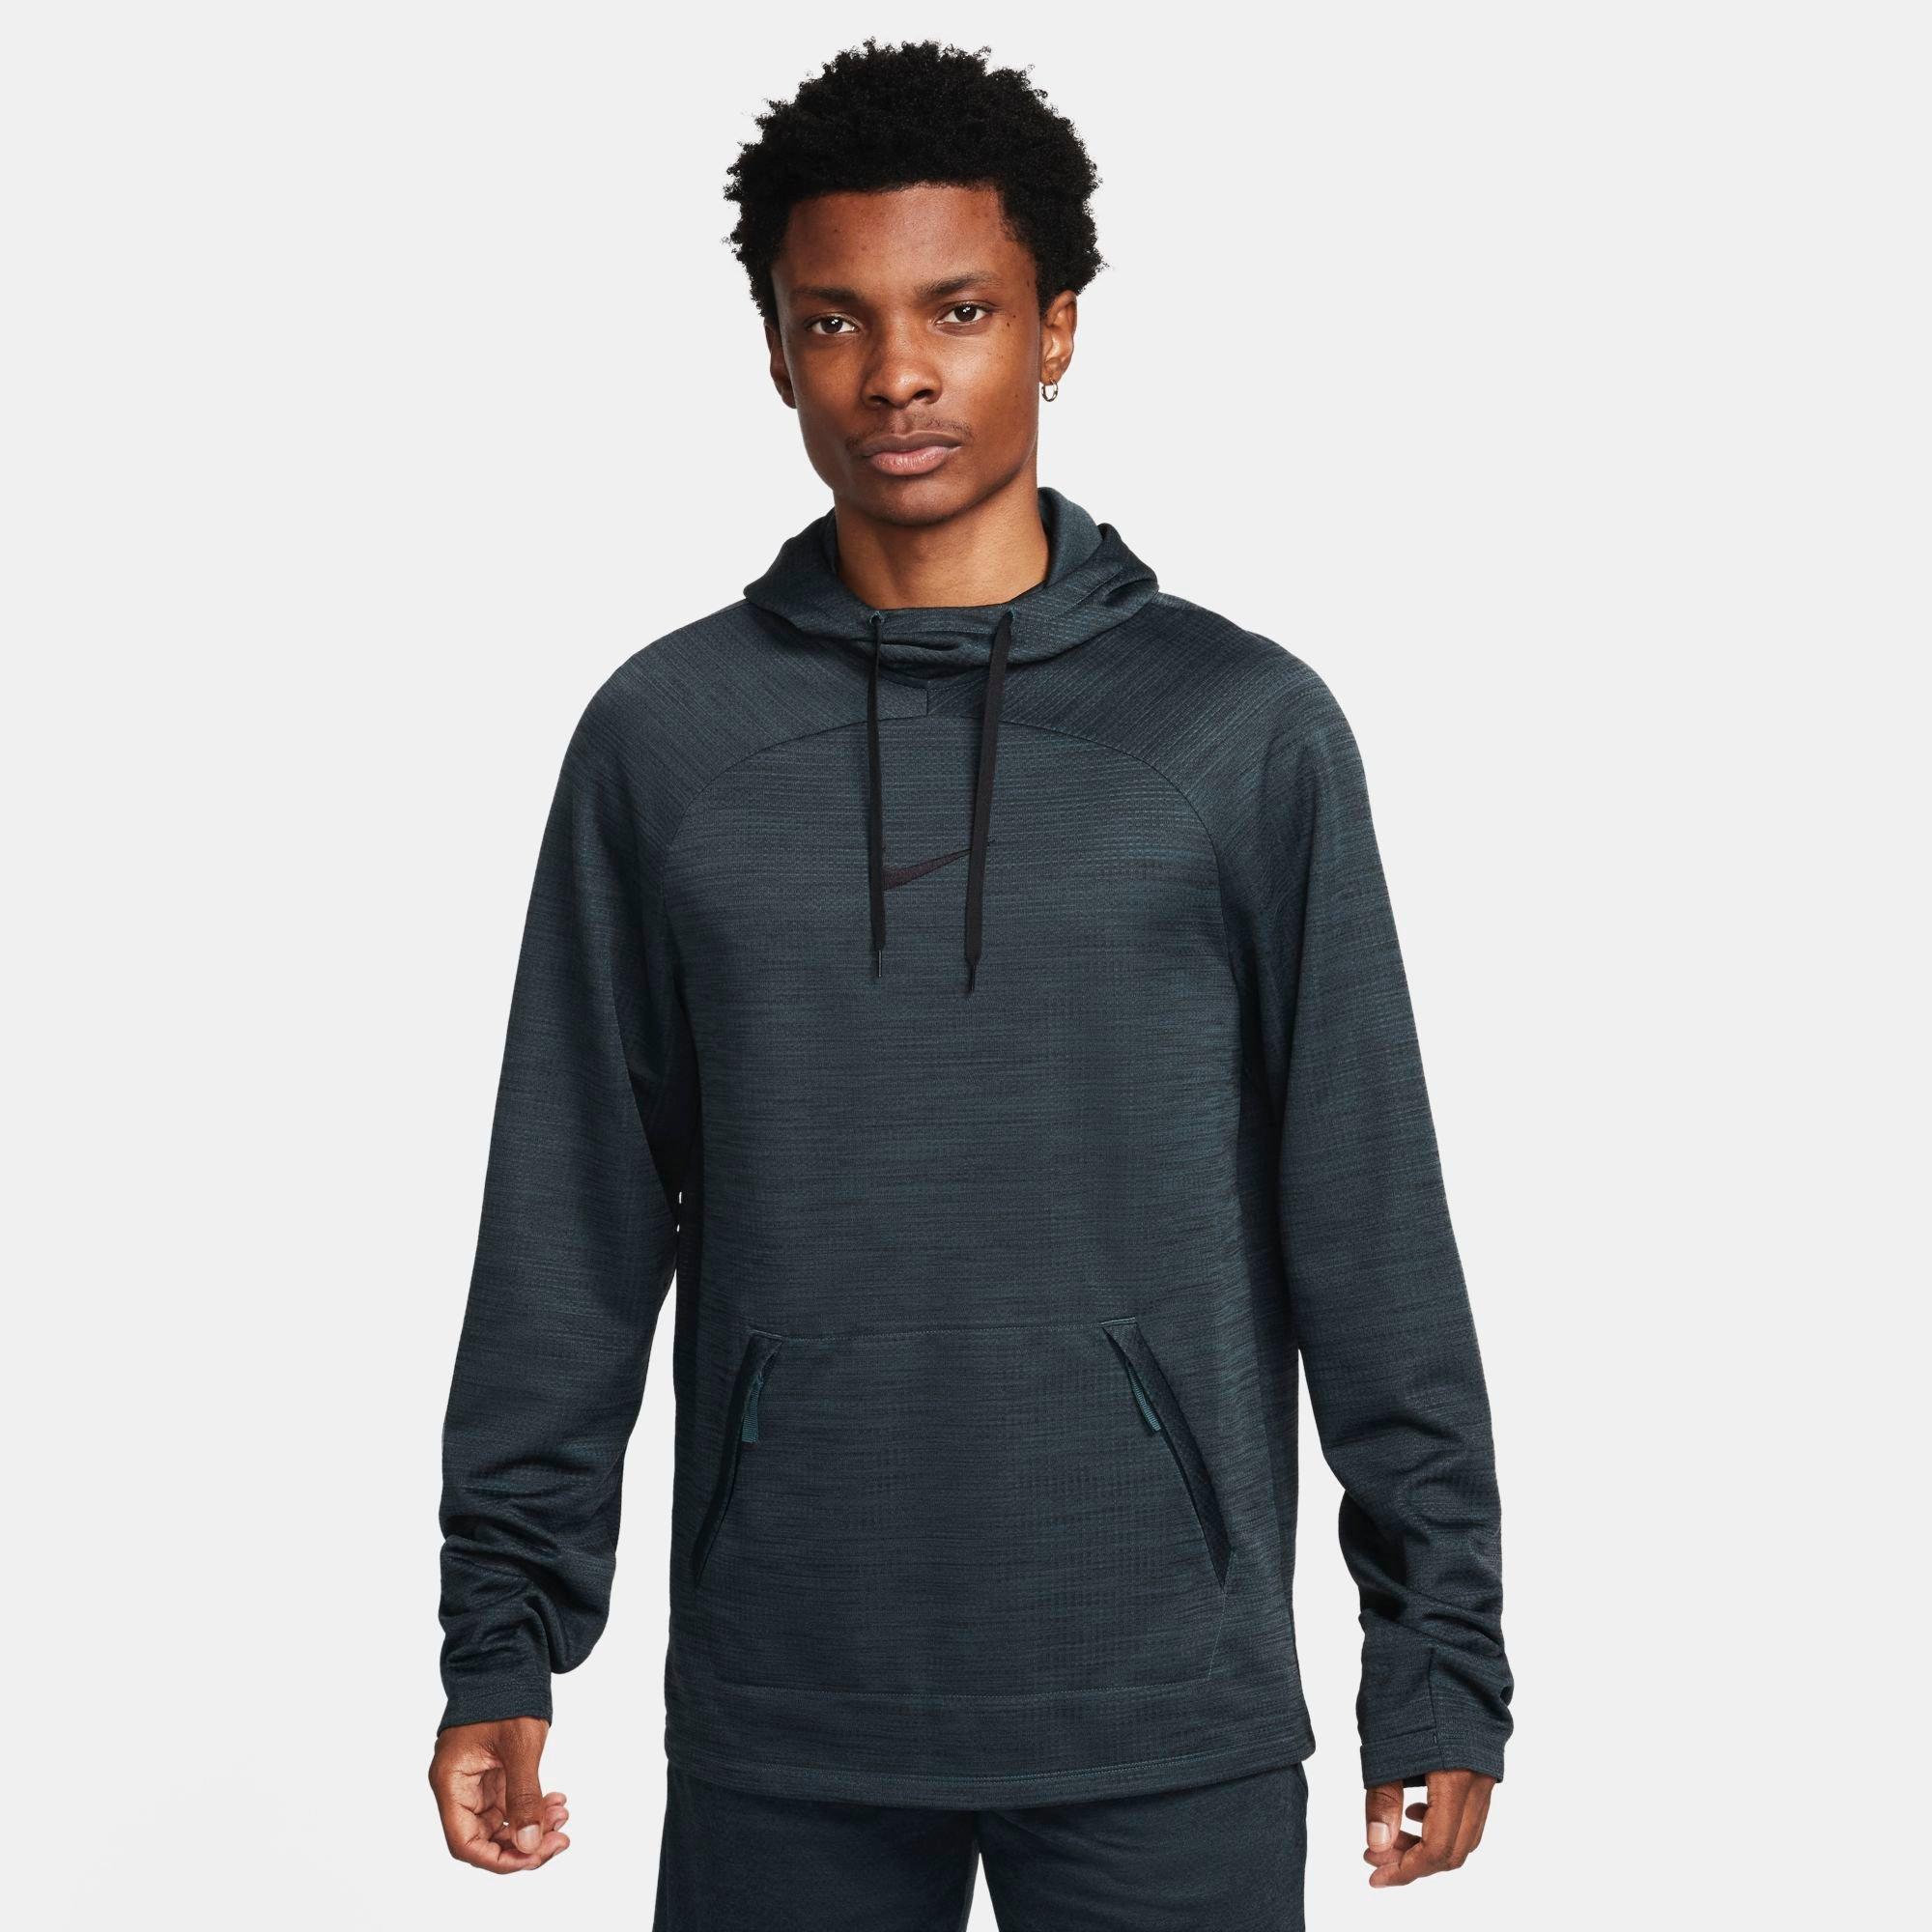 Nike Men's Academy Dri-fit Long-sleeve Hooded Football Top In Deep Jungle/black